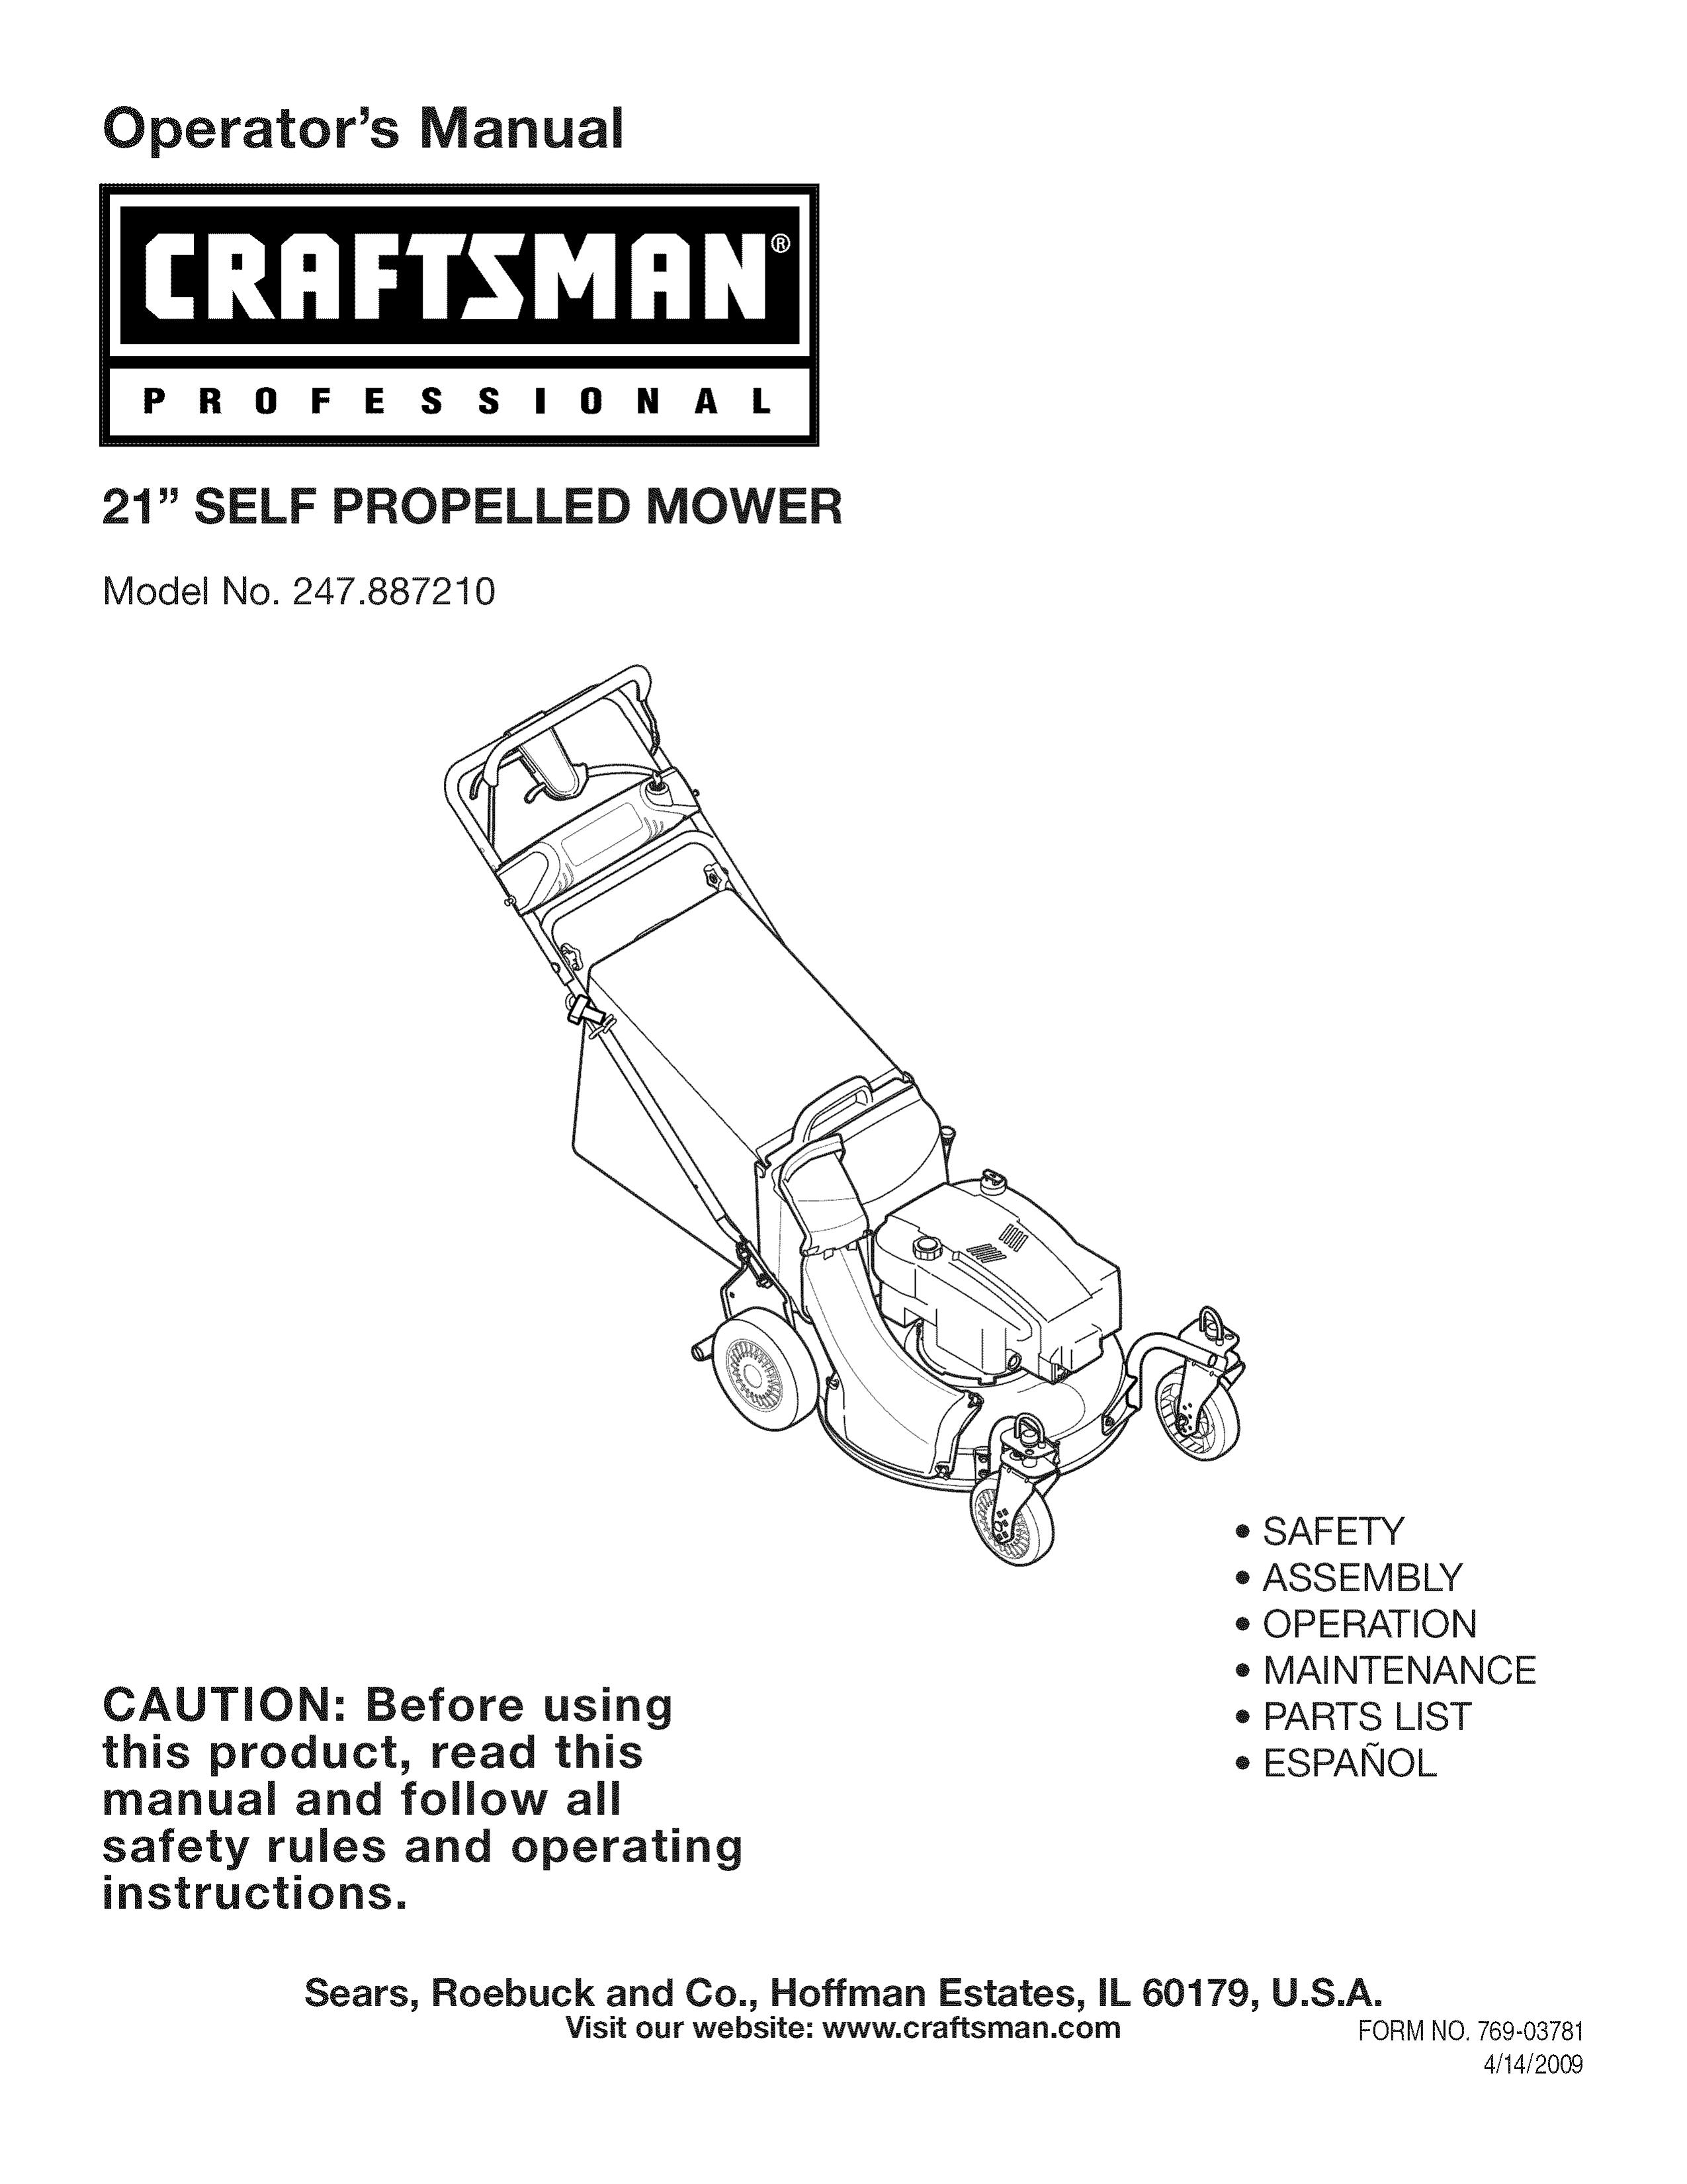 Craftsman 247.887210 Lawn Mower User Manual